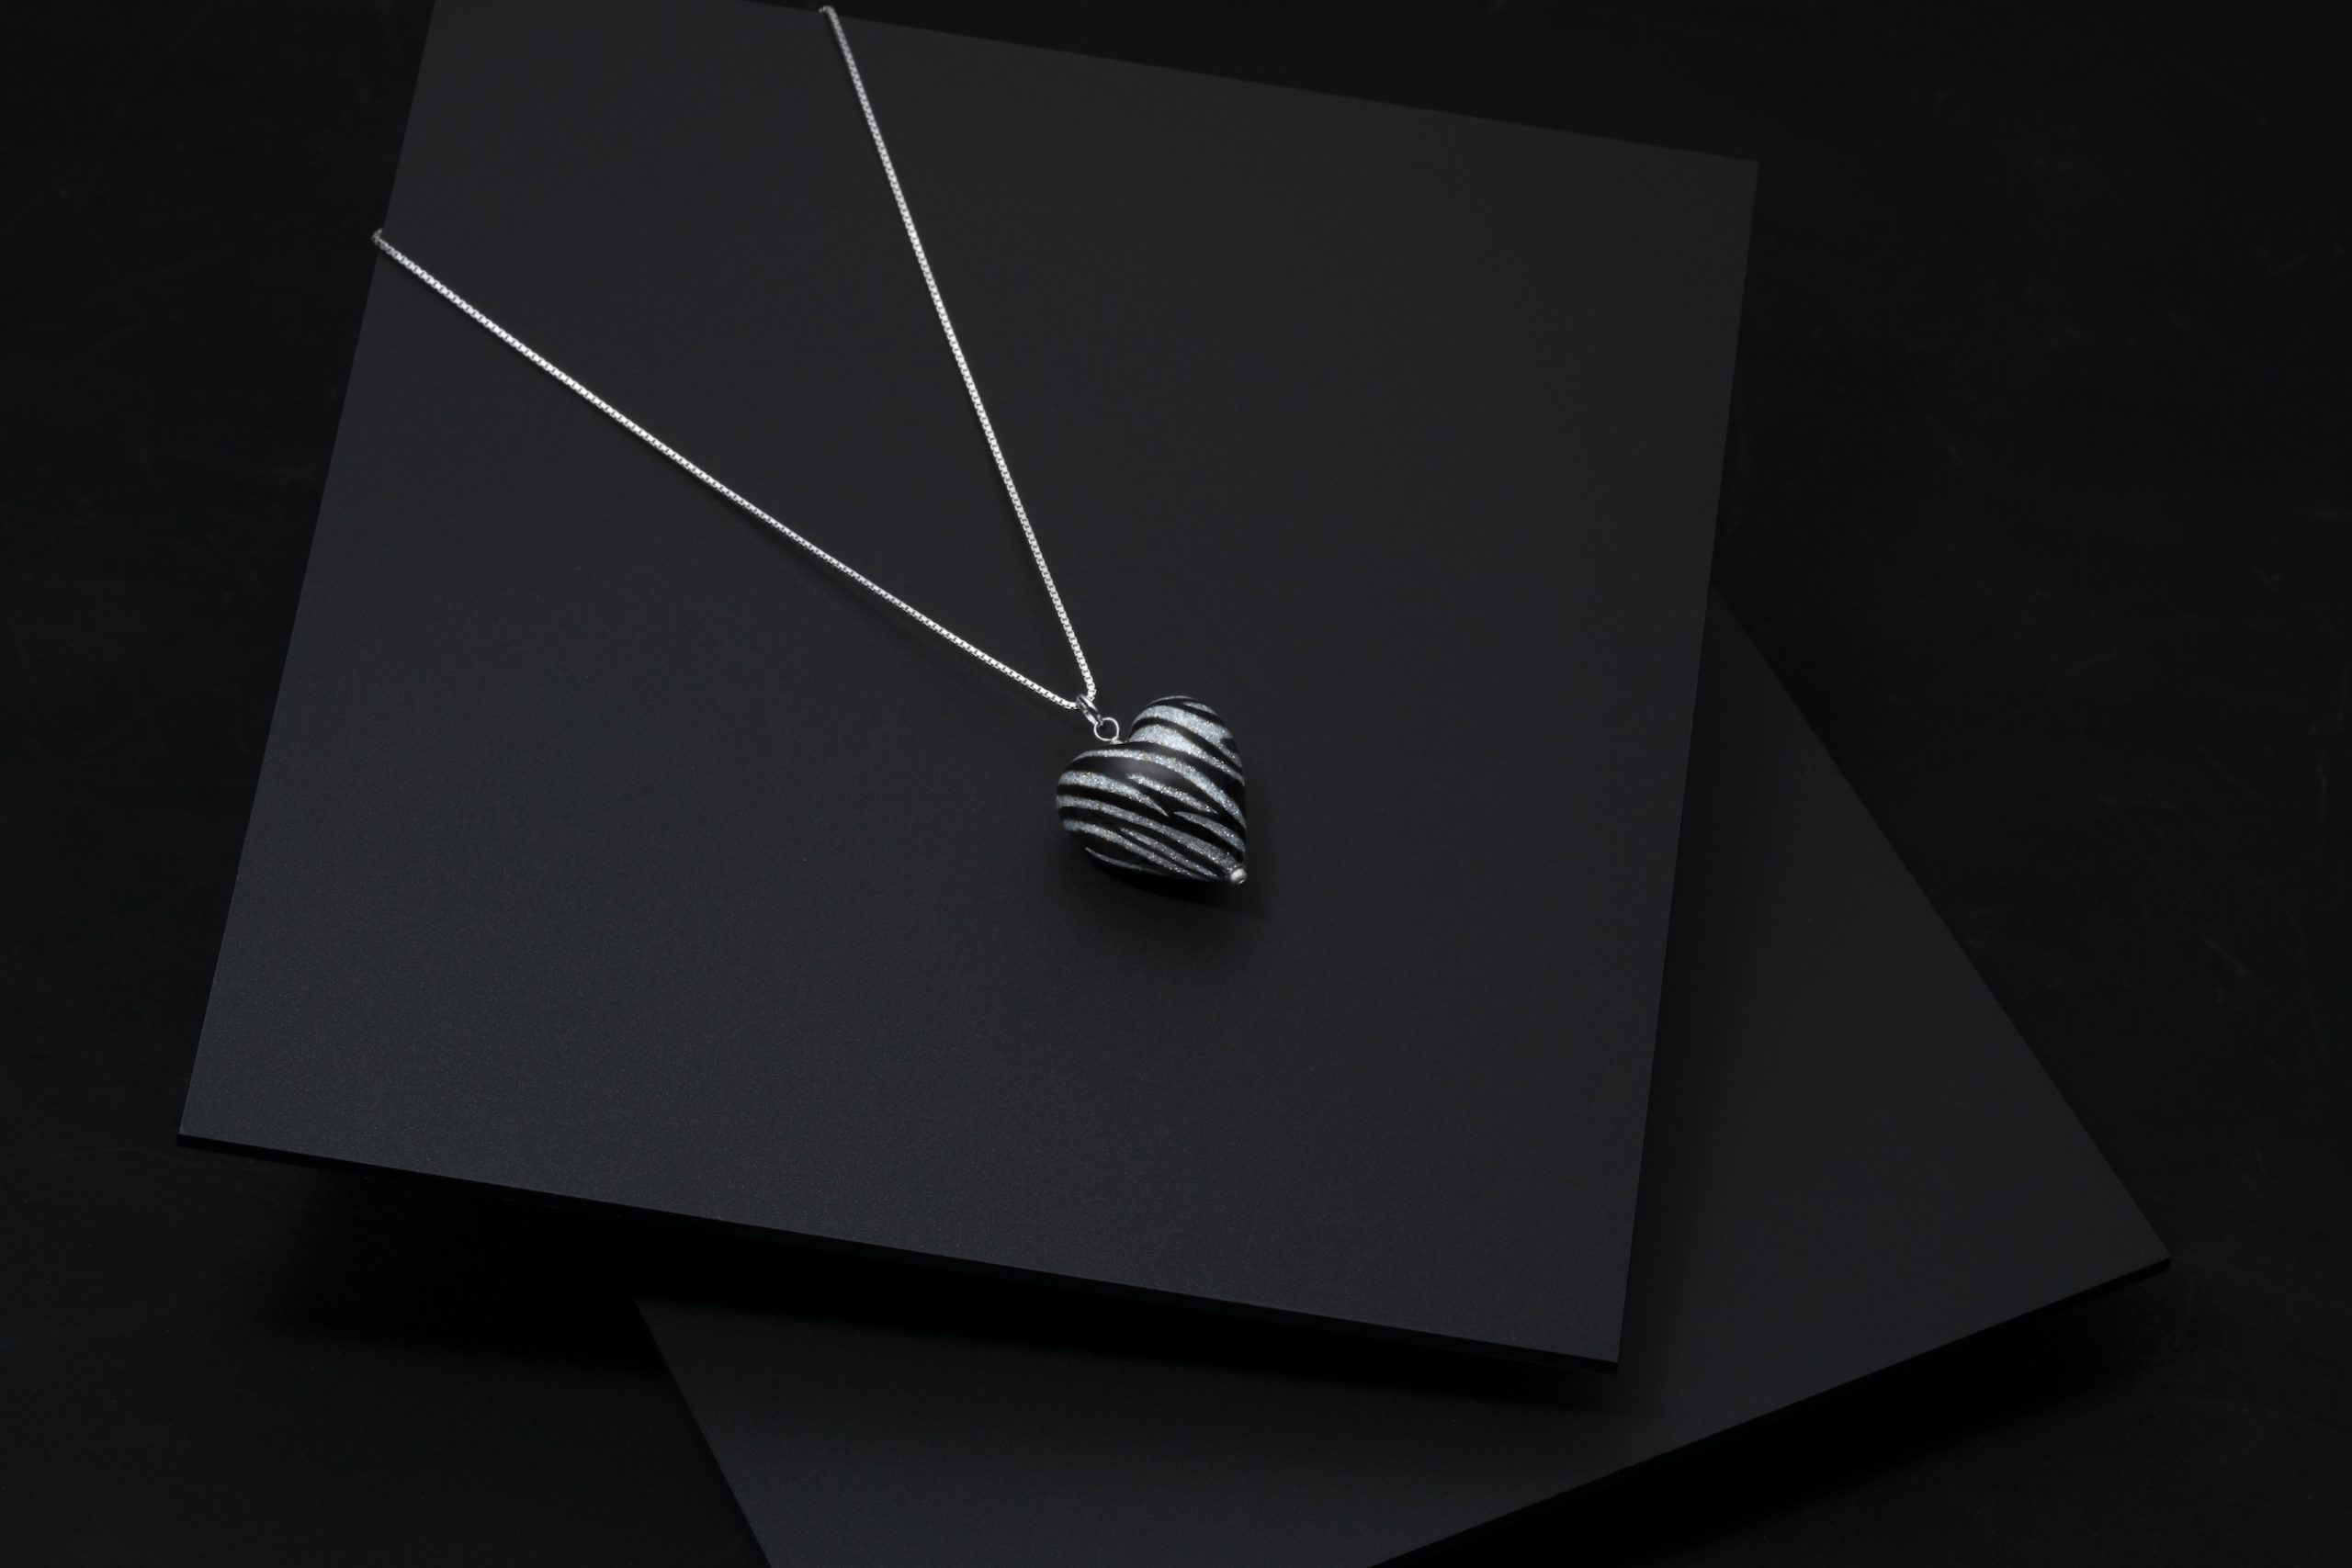 murano glass heart zebra necklace